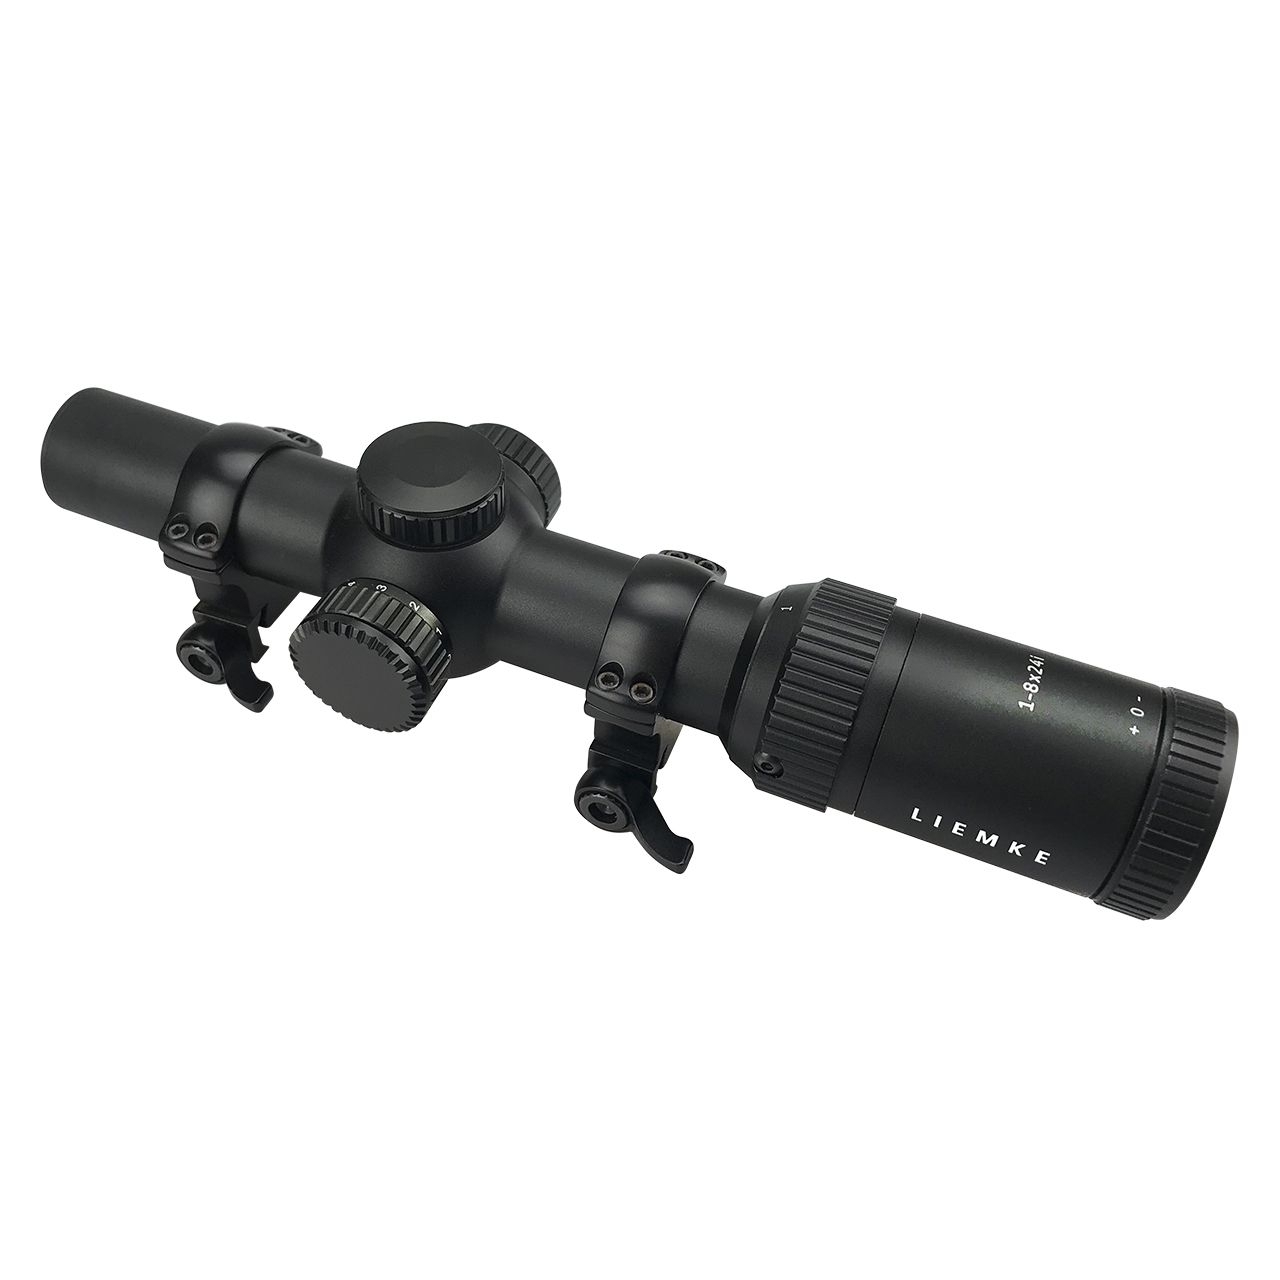 ZF 1-8x24 Riflescope